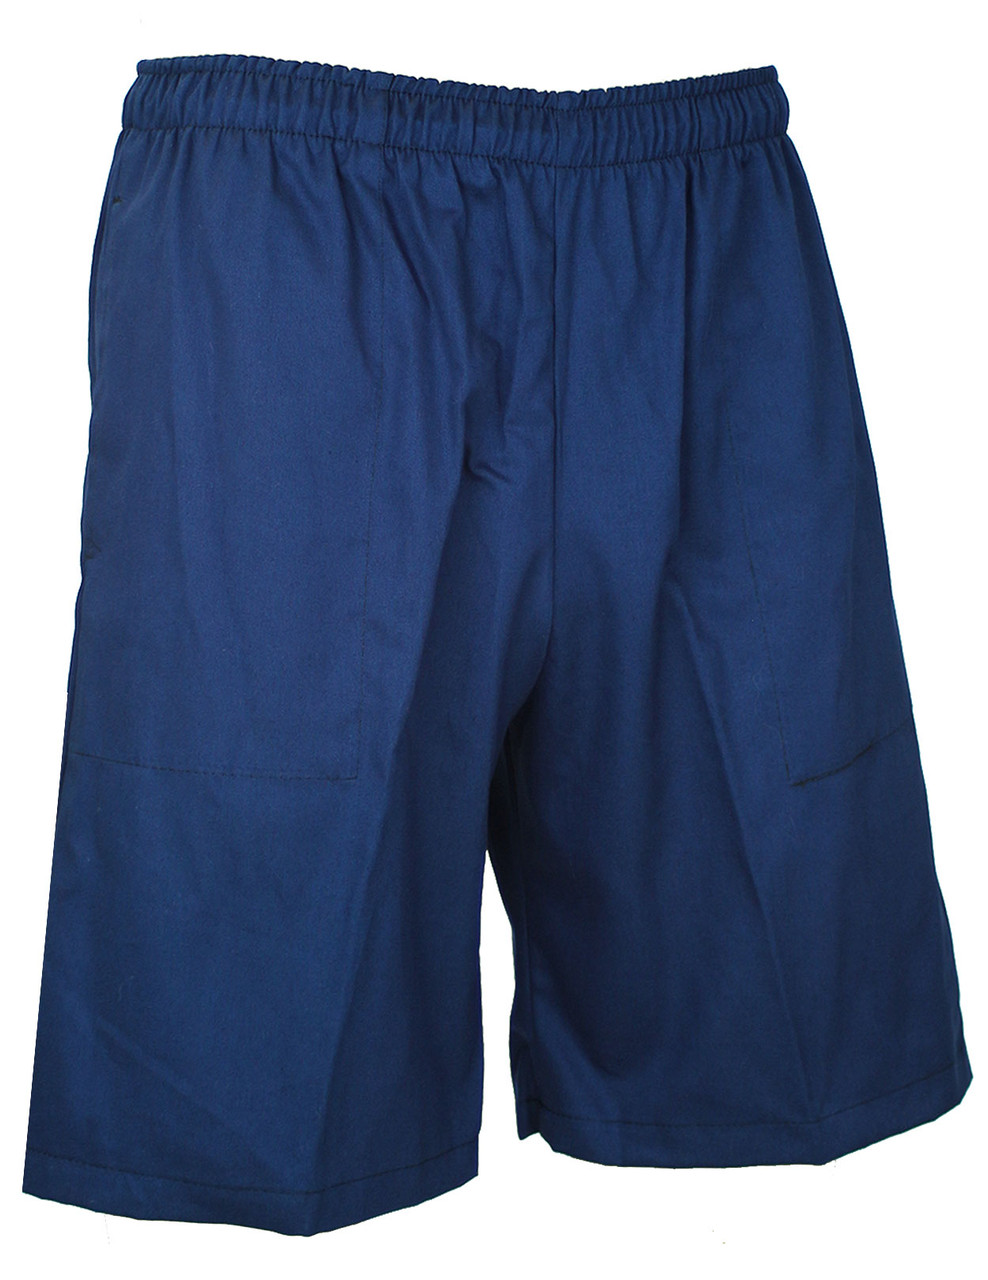 TheDoubleF Men Clothing Shorts Bermudas Navy blue cotton bermuda shorts 